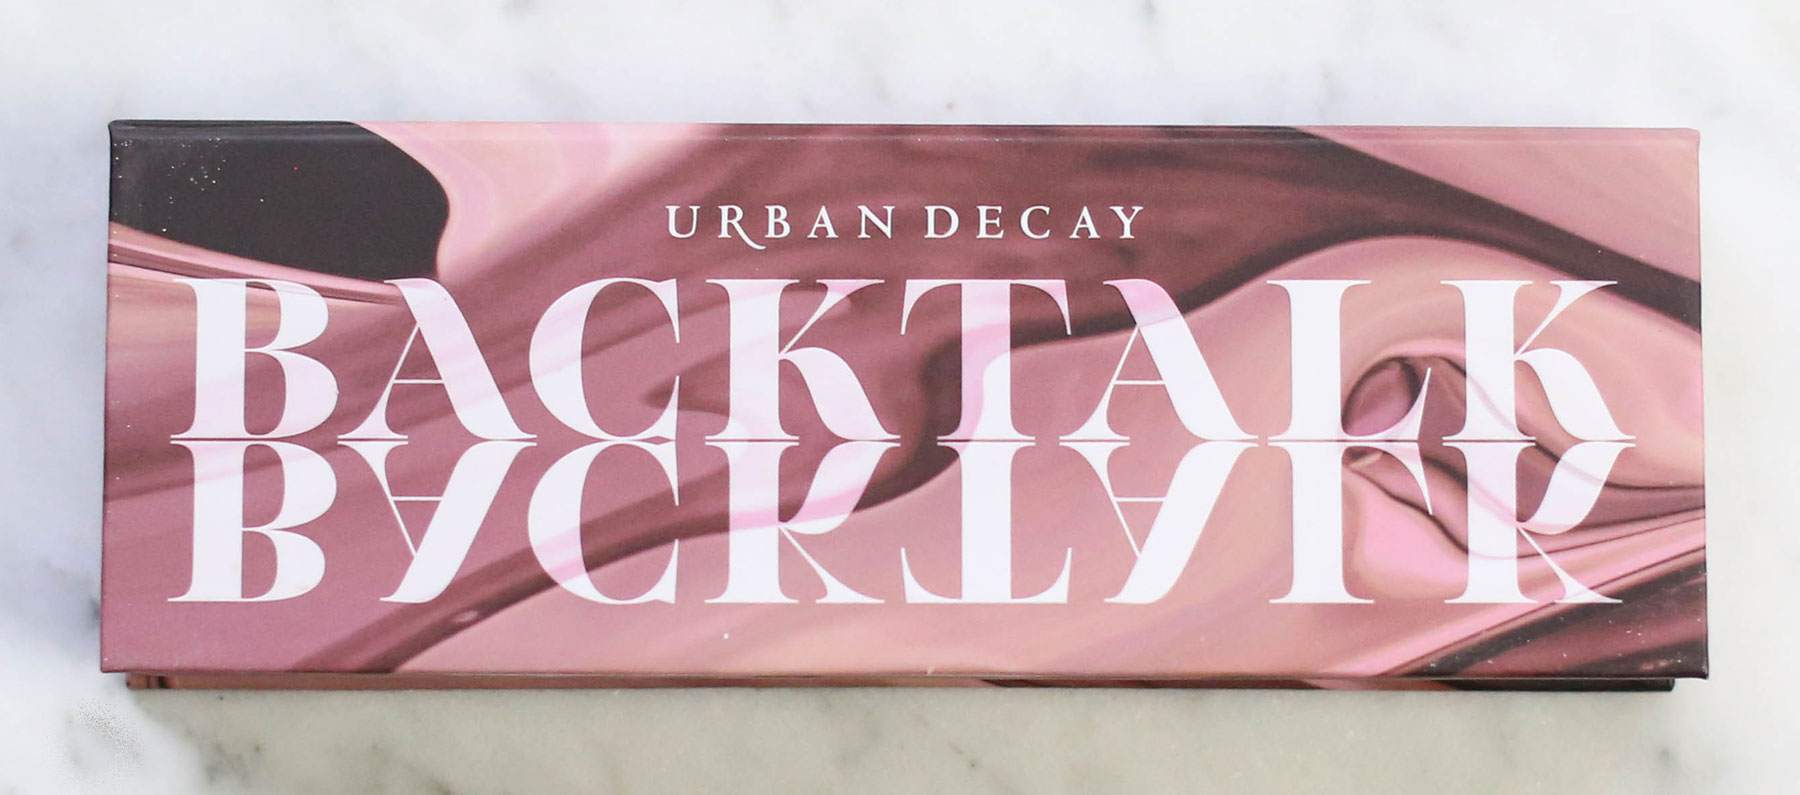 Urban Decay, urban decay backtalk palette, monochromatic makeup, backtalk limited edition palette, urban decay backtalk review, backtalk swatches